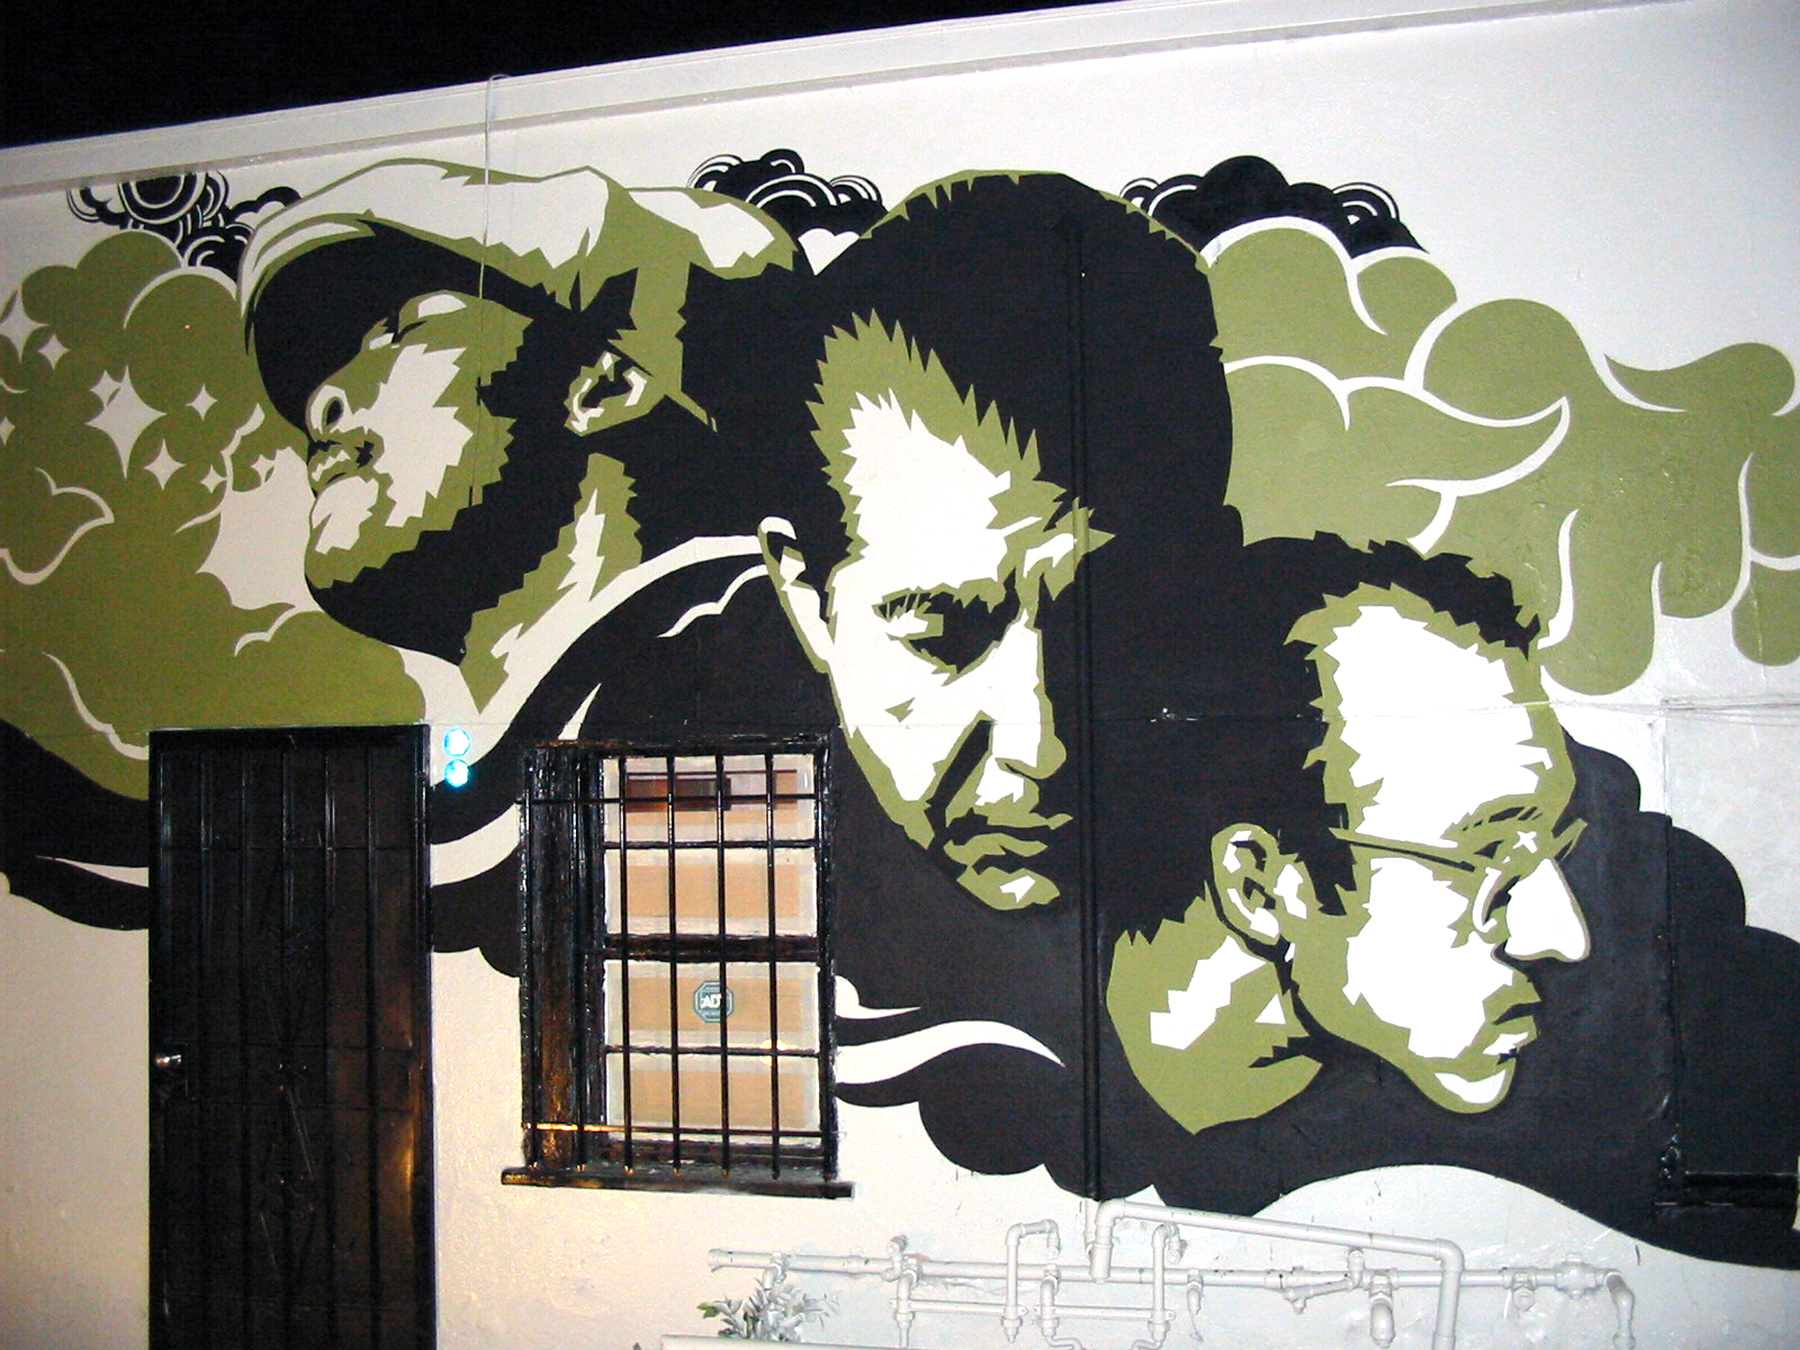 Donny Hathaway, Leonard Cohen, Keith Haring